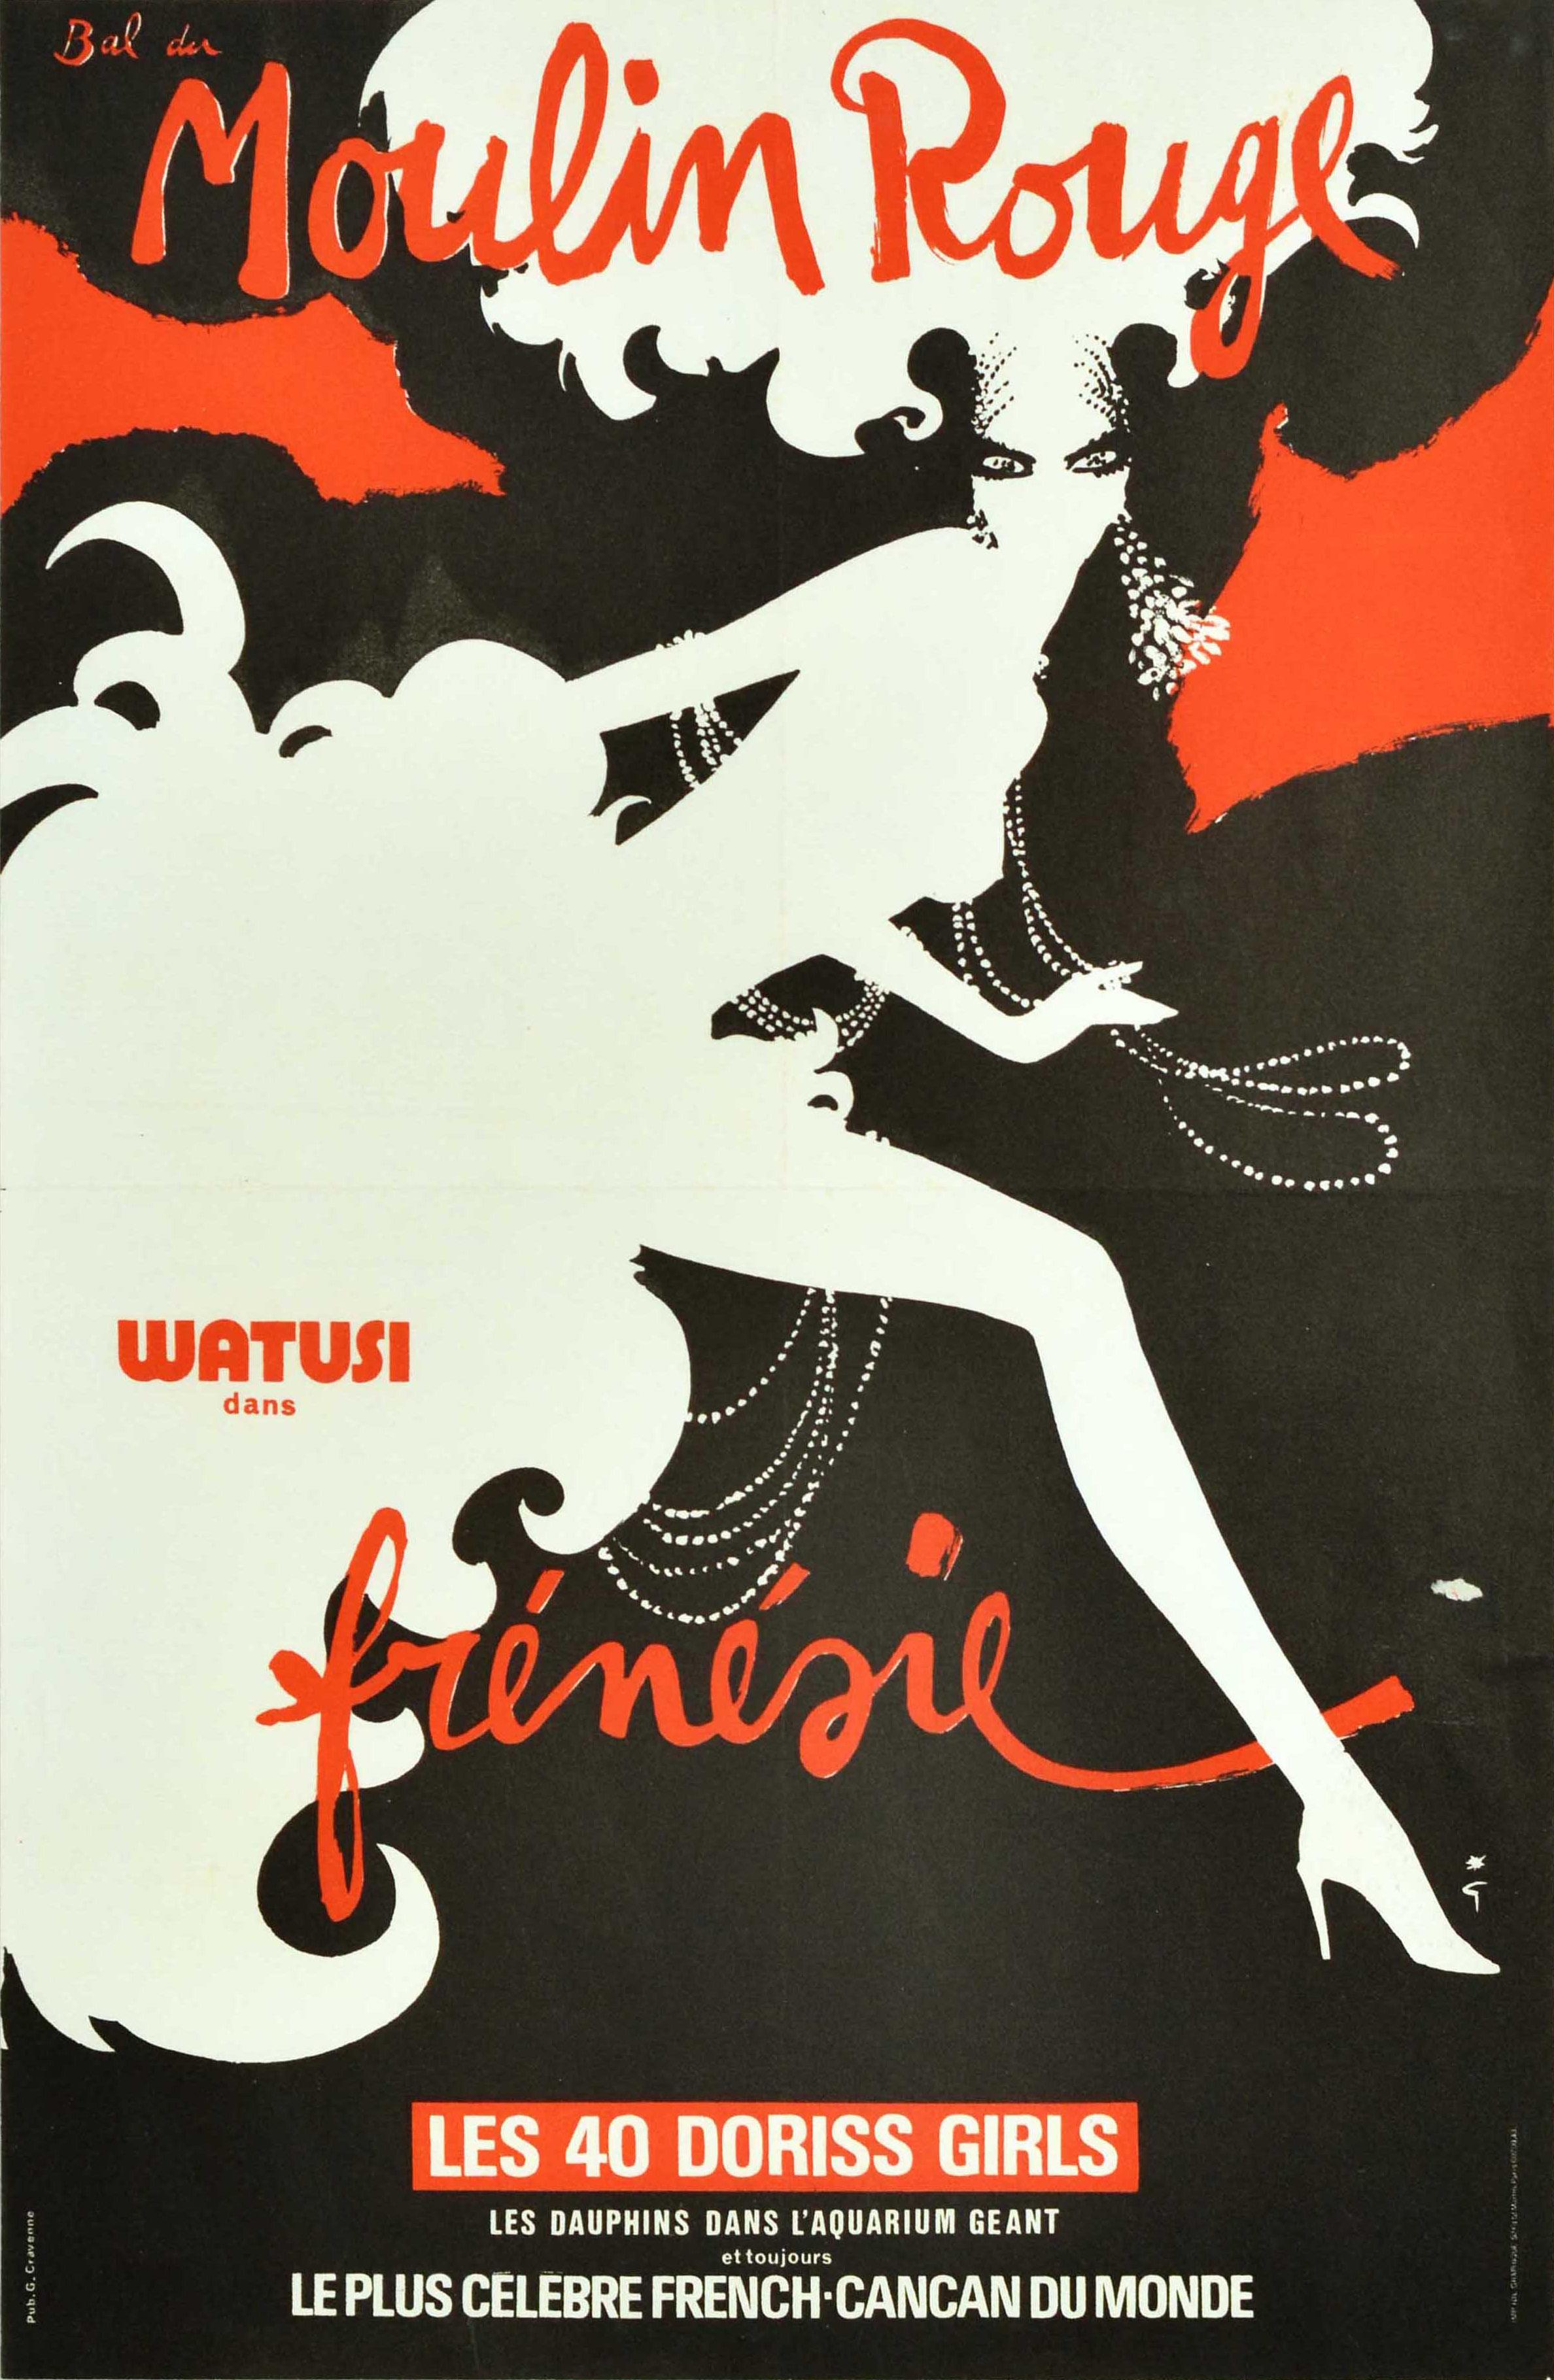 René Gruau Print - Original Vintage Moulin Rouge Poster Watusi Frenesie Cabaret Doriss Girls Cancan